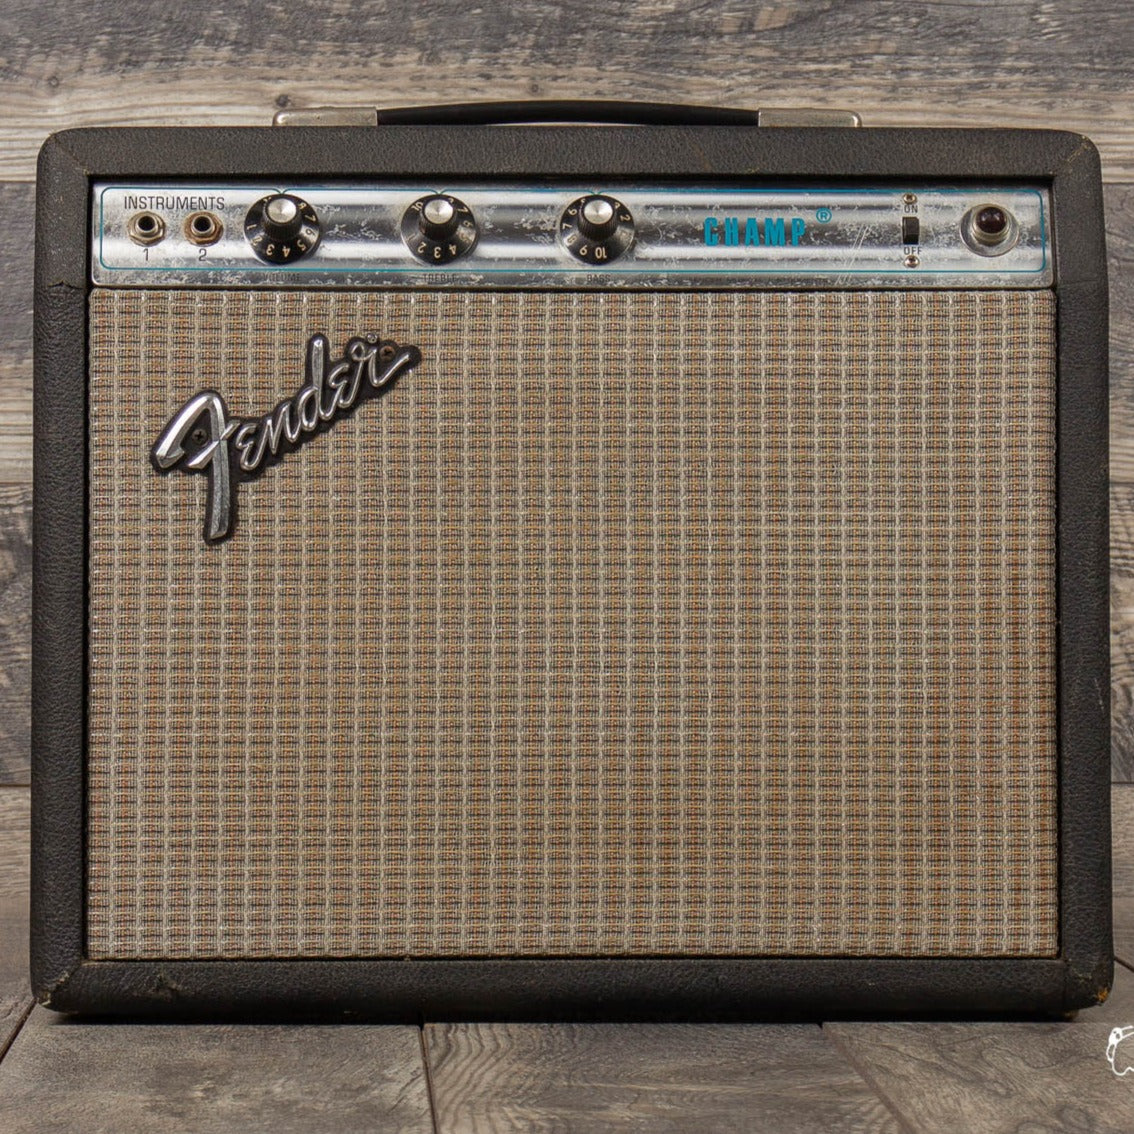 1975 Fender Champ Amplifier